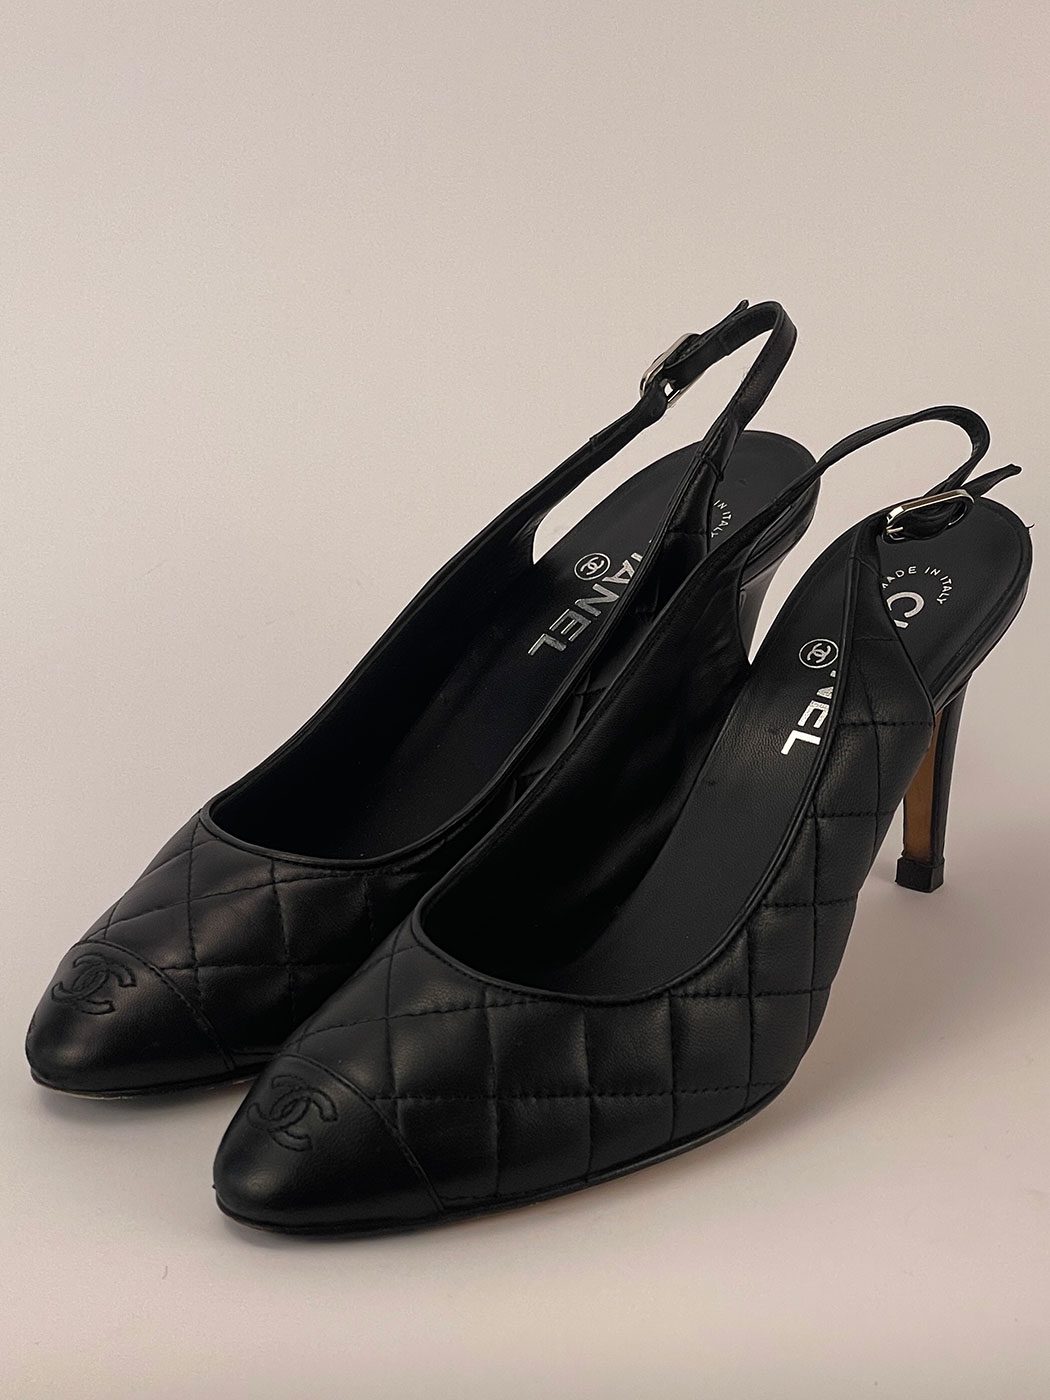 Chanel Black Quilted Slingback Heels Size 39 (UK 6) - Dress